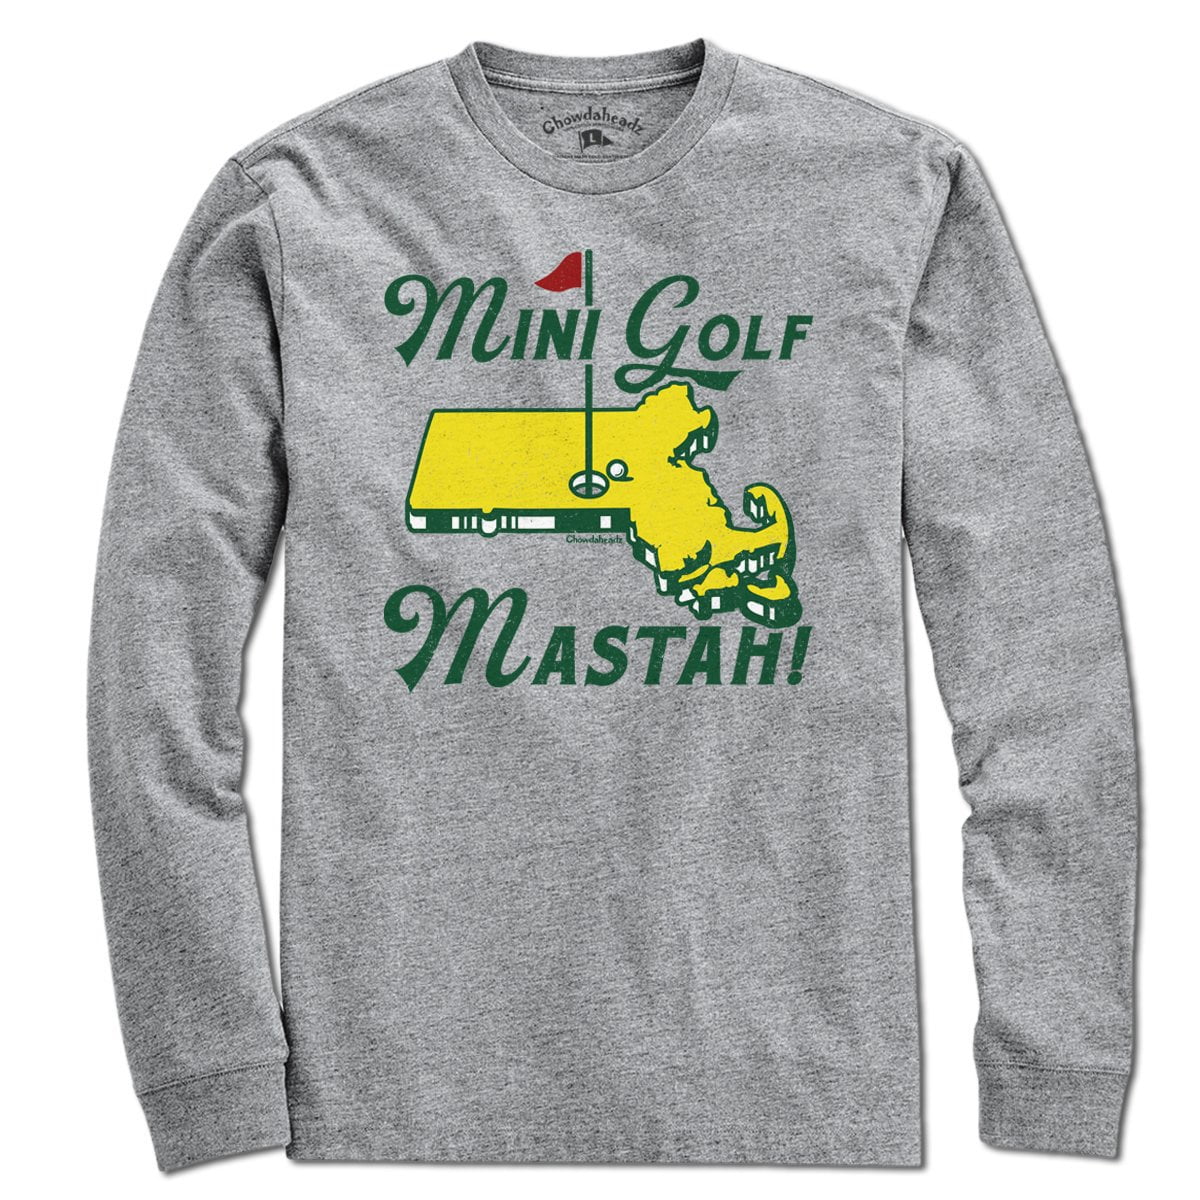 Mini Golf Mastah T-Shirt - Chowdaheadz